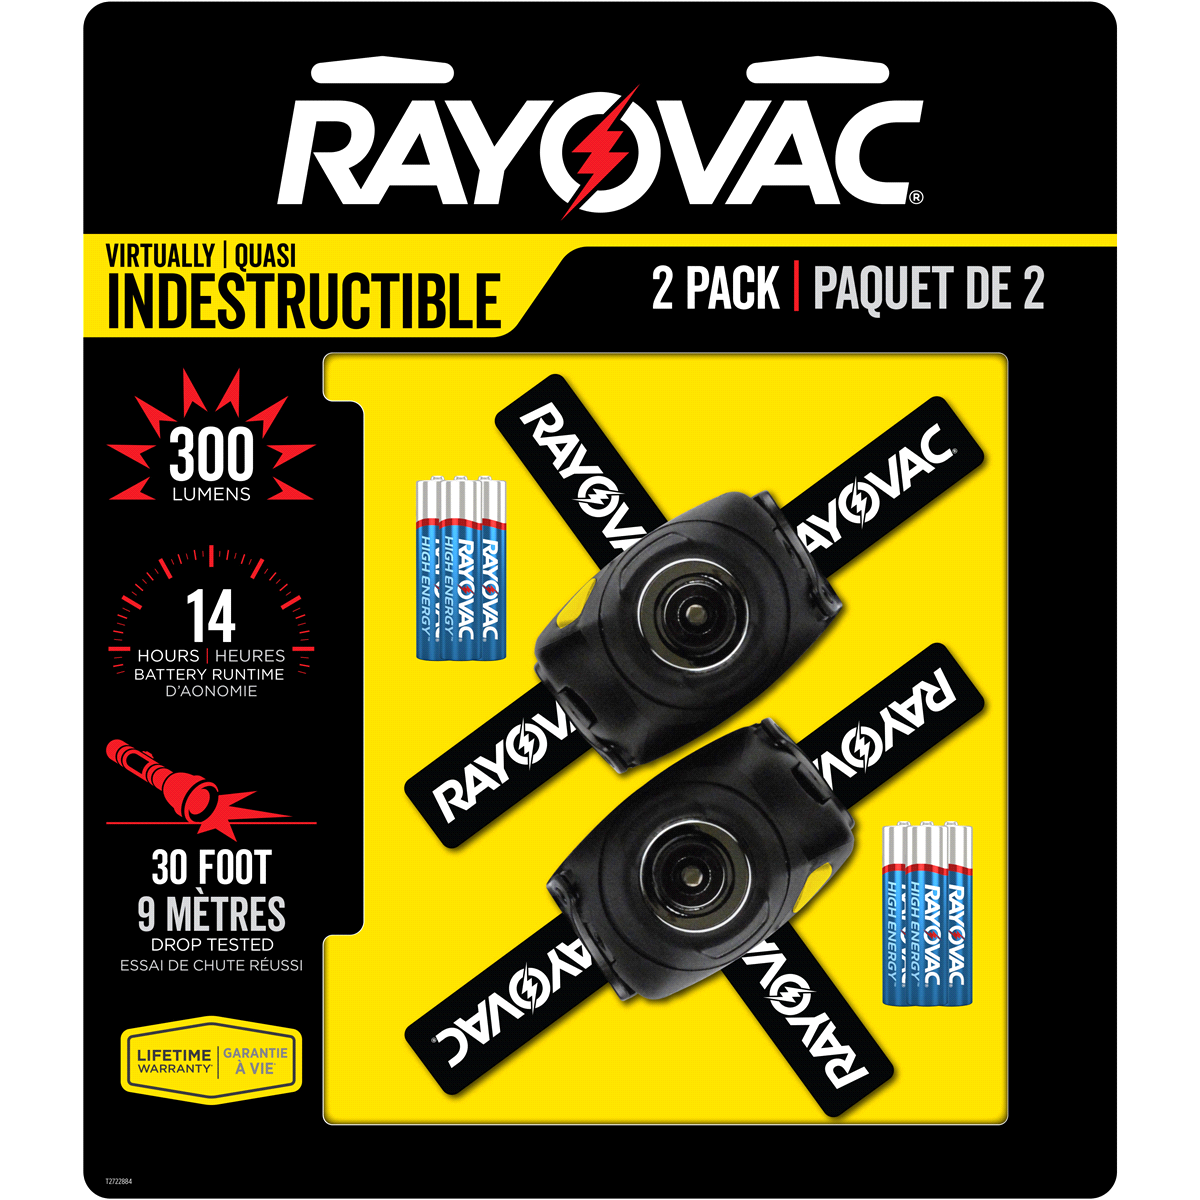 Rayovac LED Headlamp Flashlight 300 Lumens (2 Pack) Virtually Indestructible 